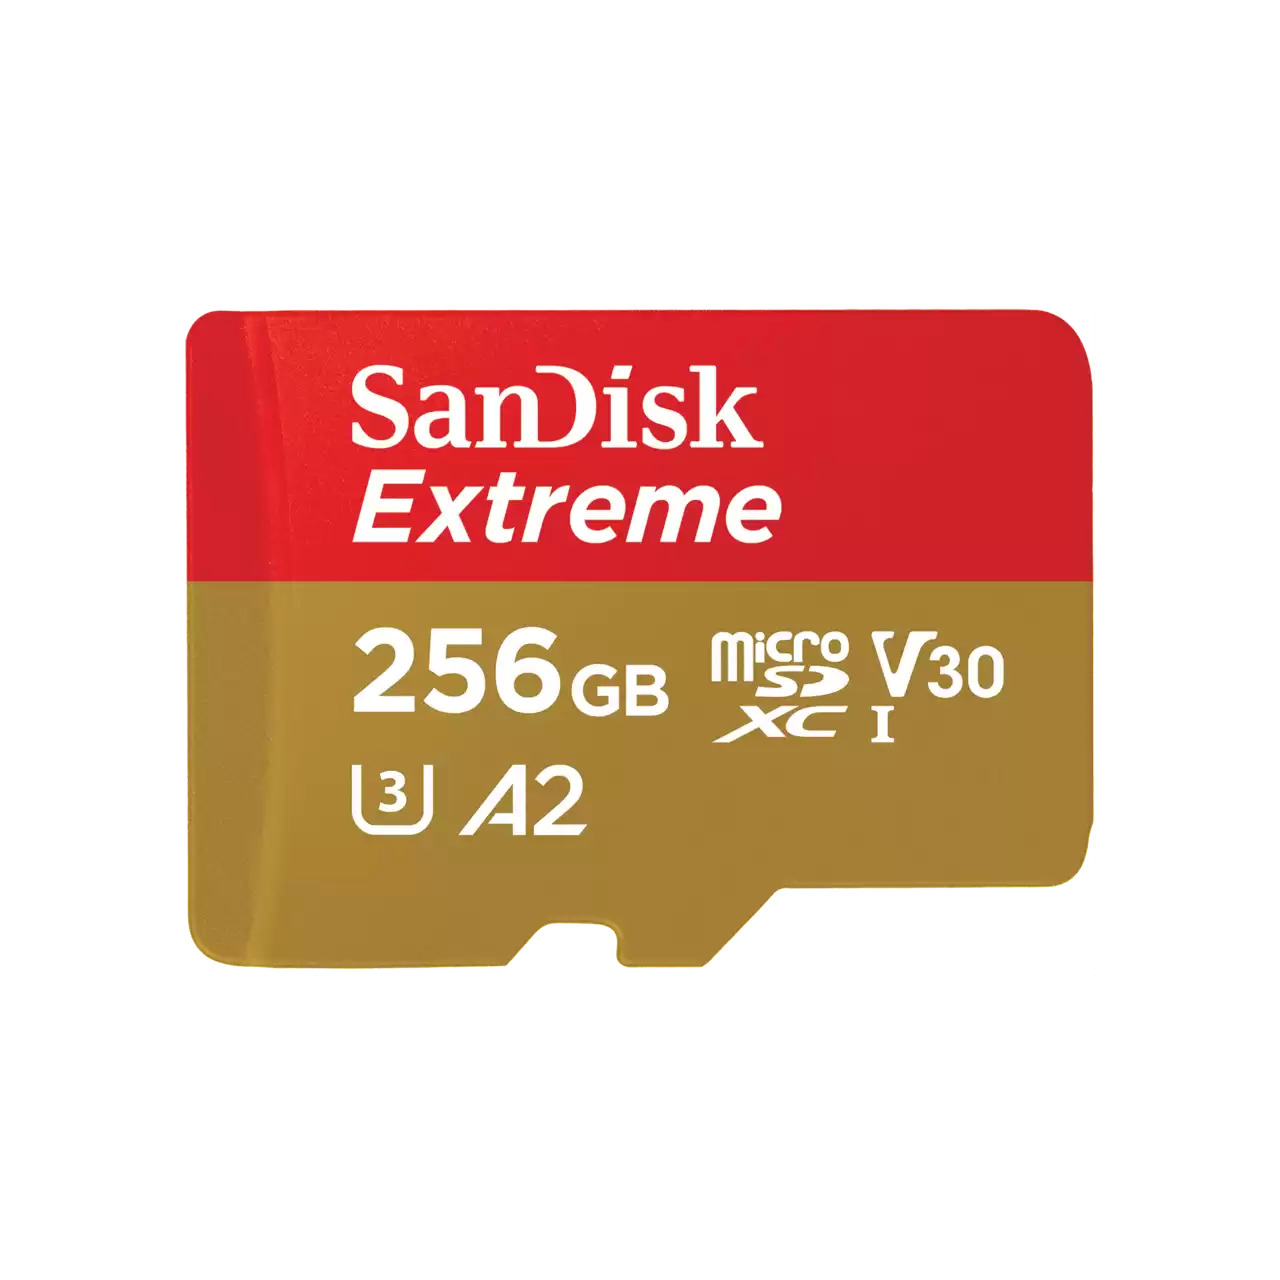 SanDisk Extreme® microSDXC™ UHS-I 4K UHD, Full HD $25.99 at Western Digital